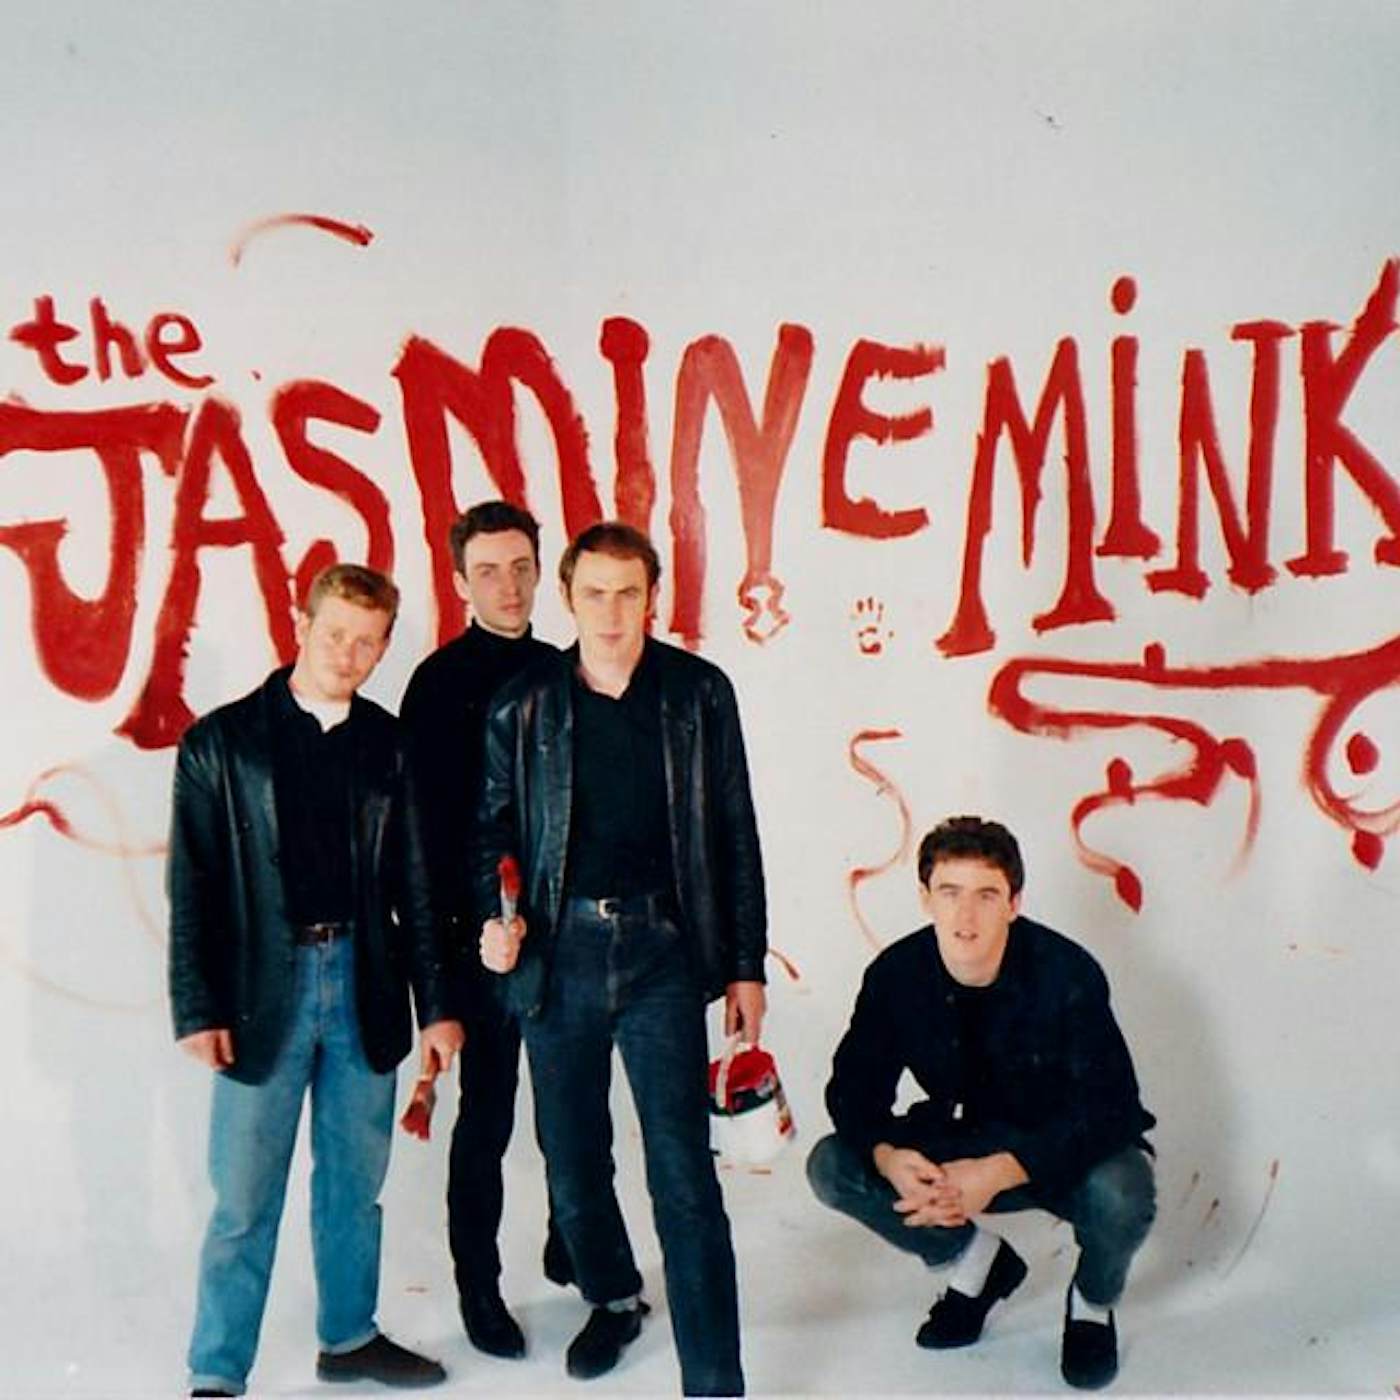 The Jasmine Minks